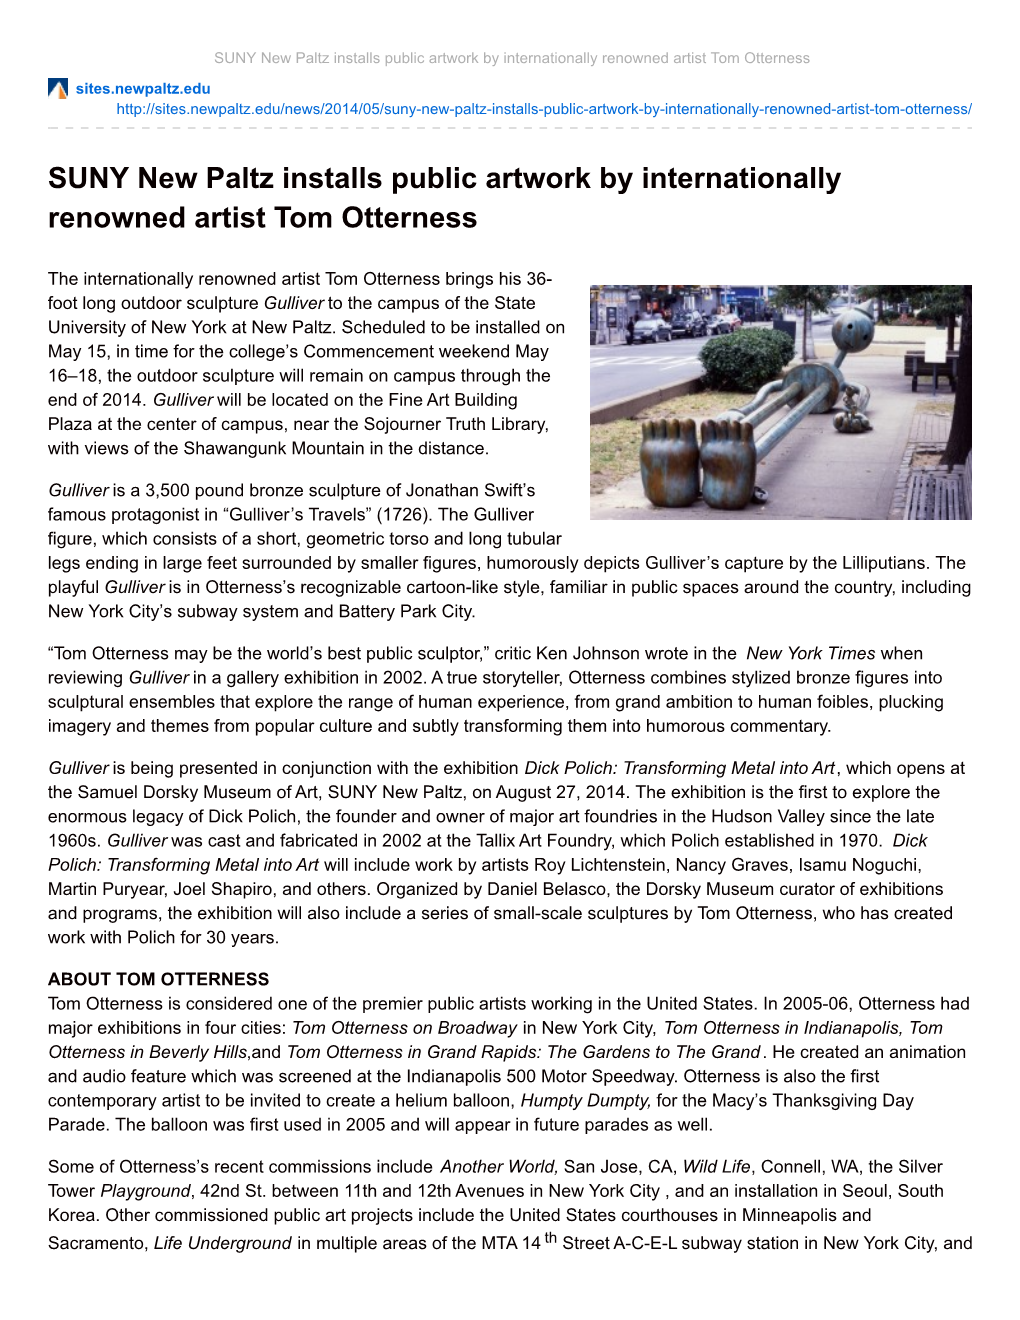 SUNY New Paltz Installs Public Artwork by Internationally Renowned Artist Tom Otterness